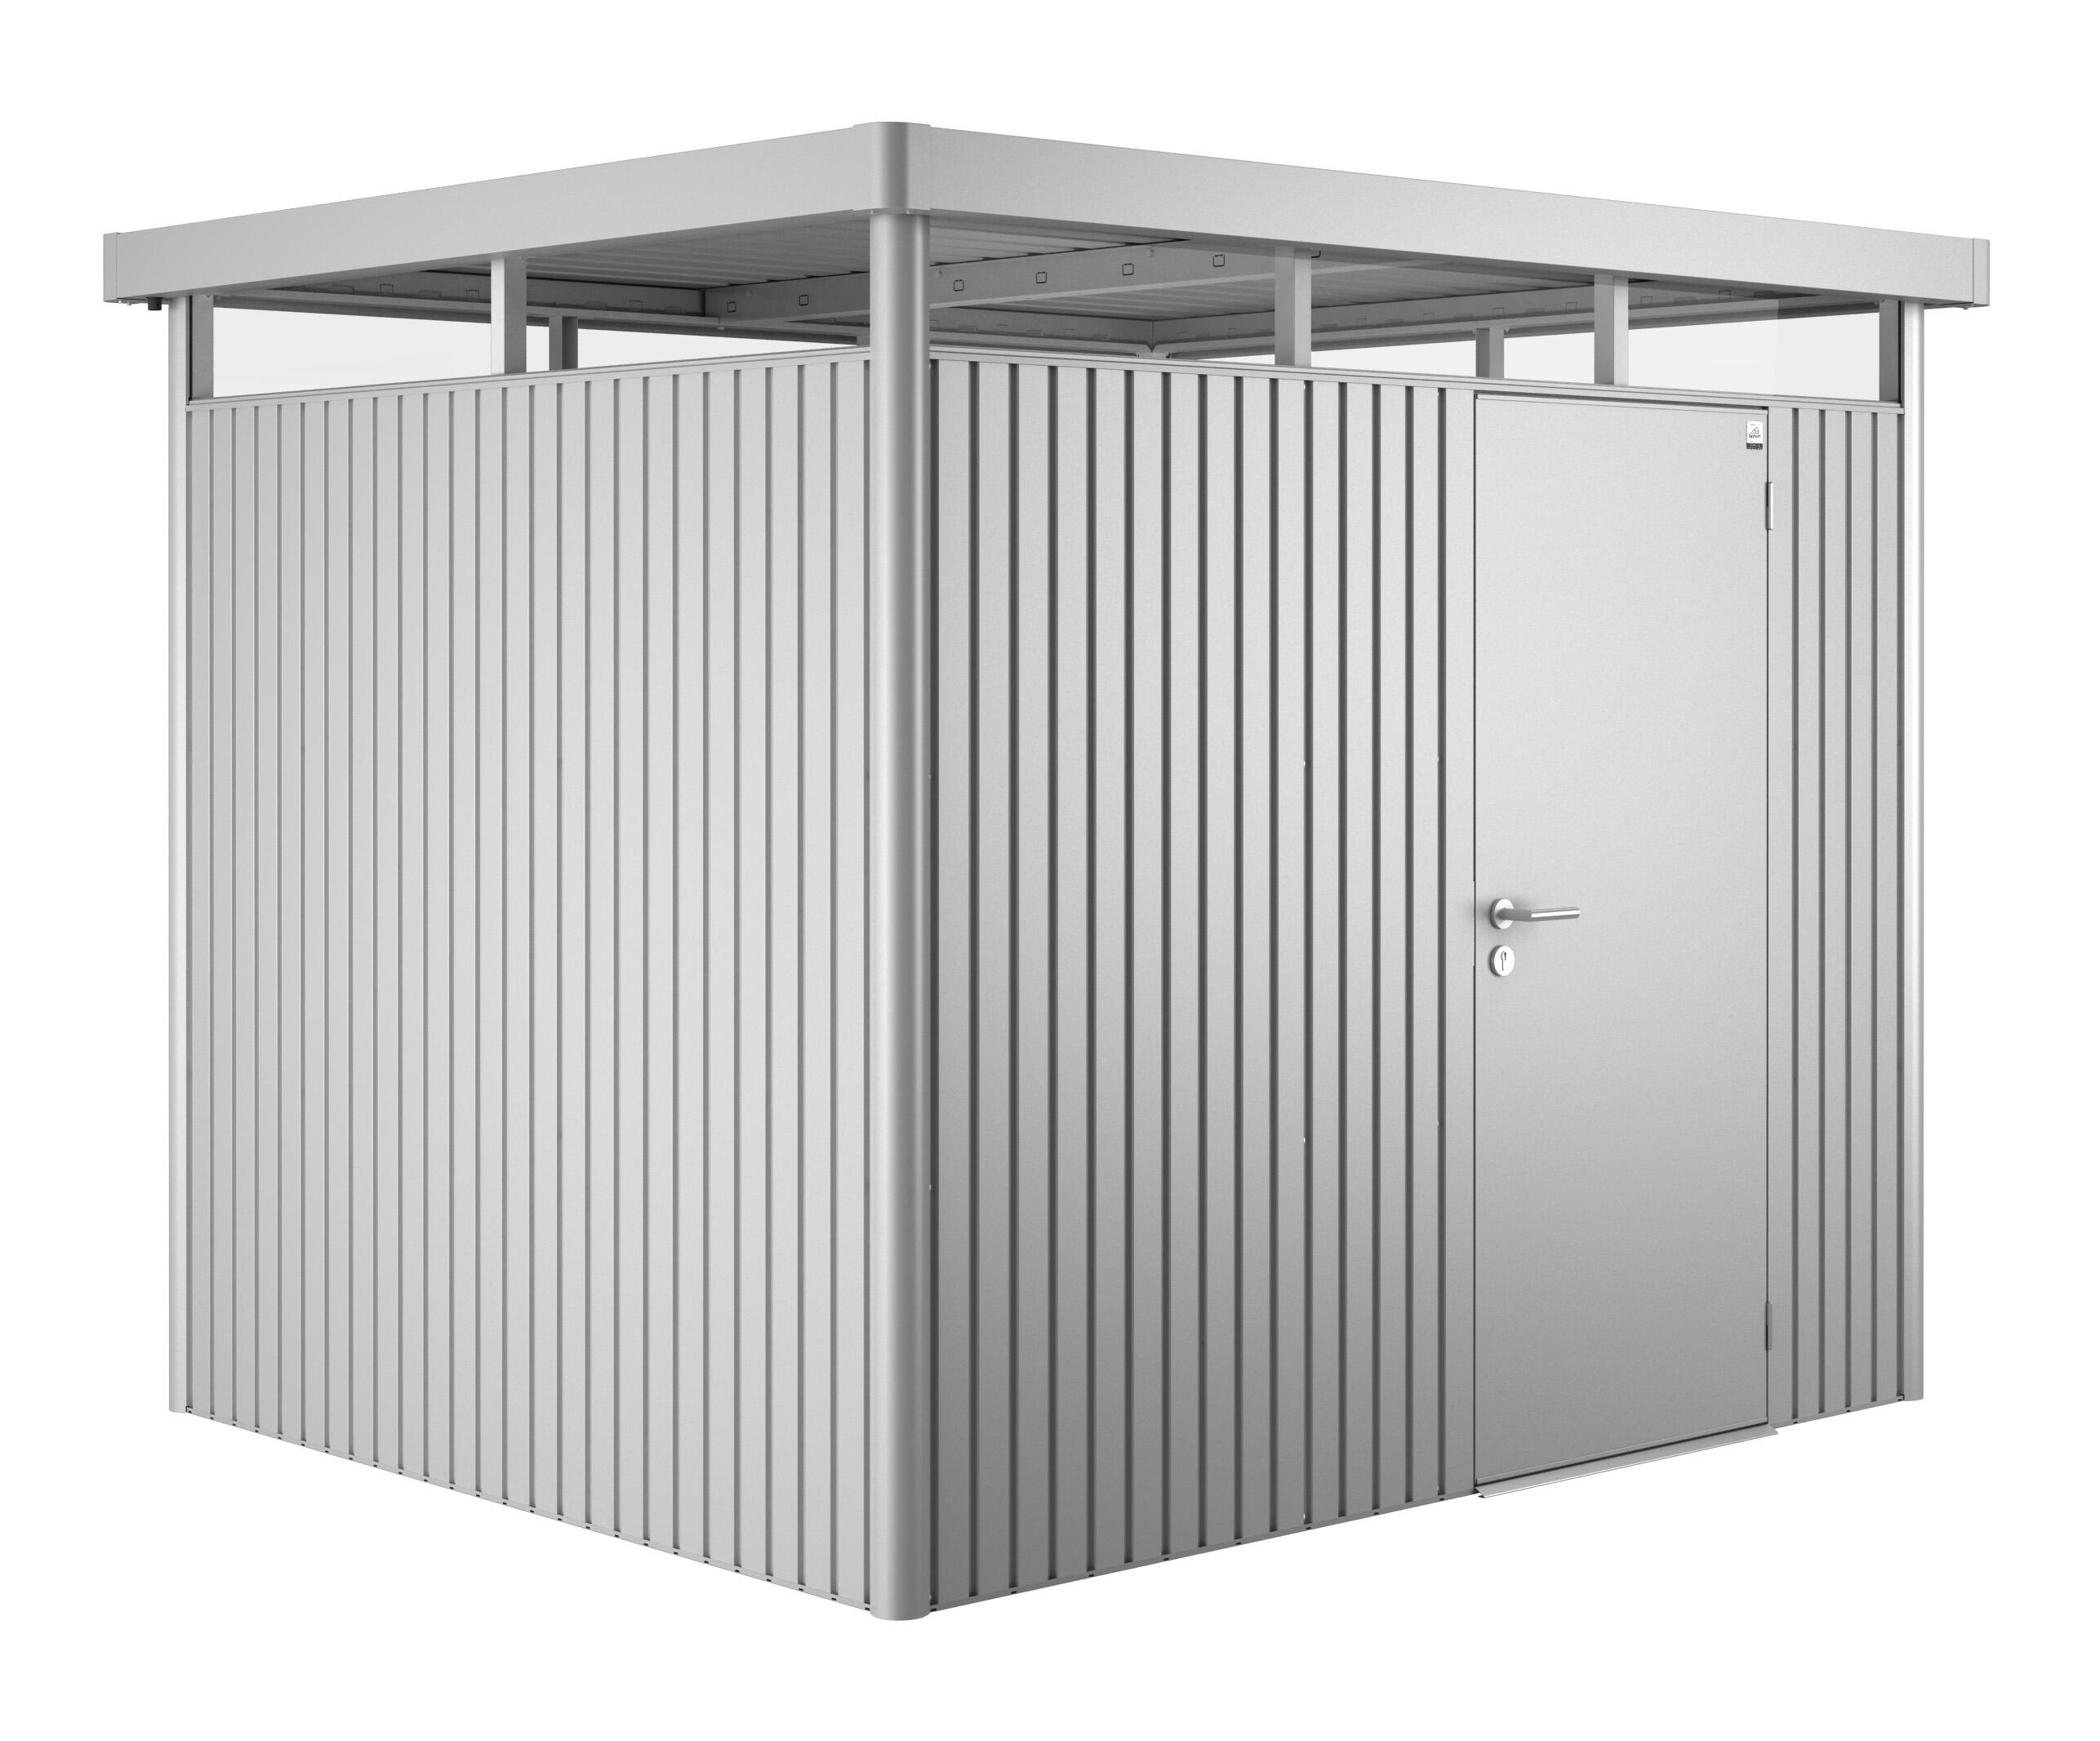 Caseta de metal highline de 275x222x235 cm y 6.46 m2